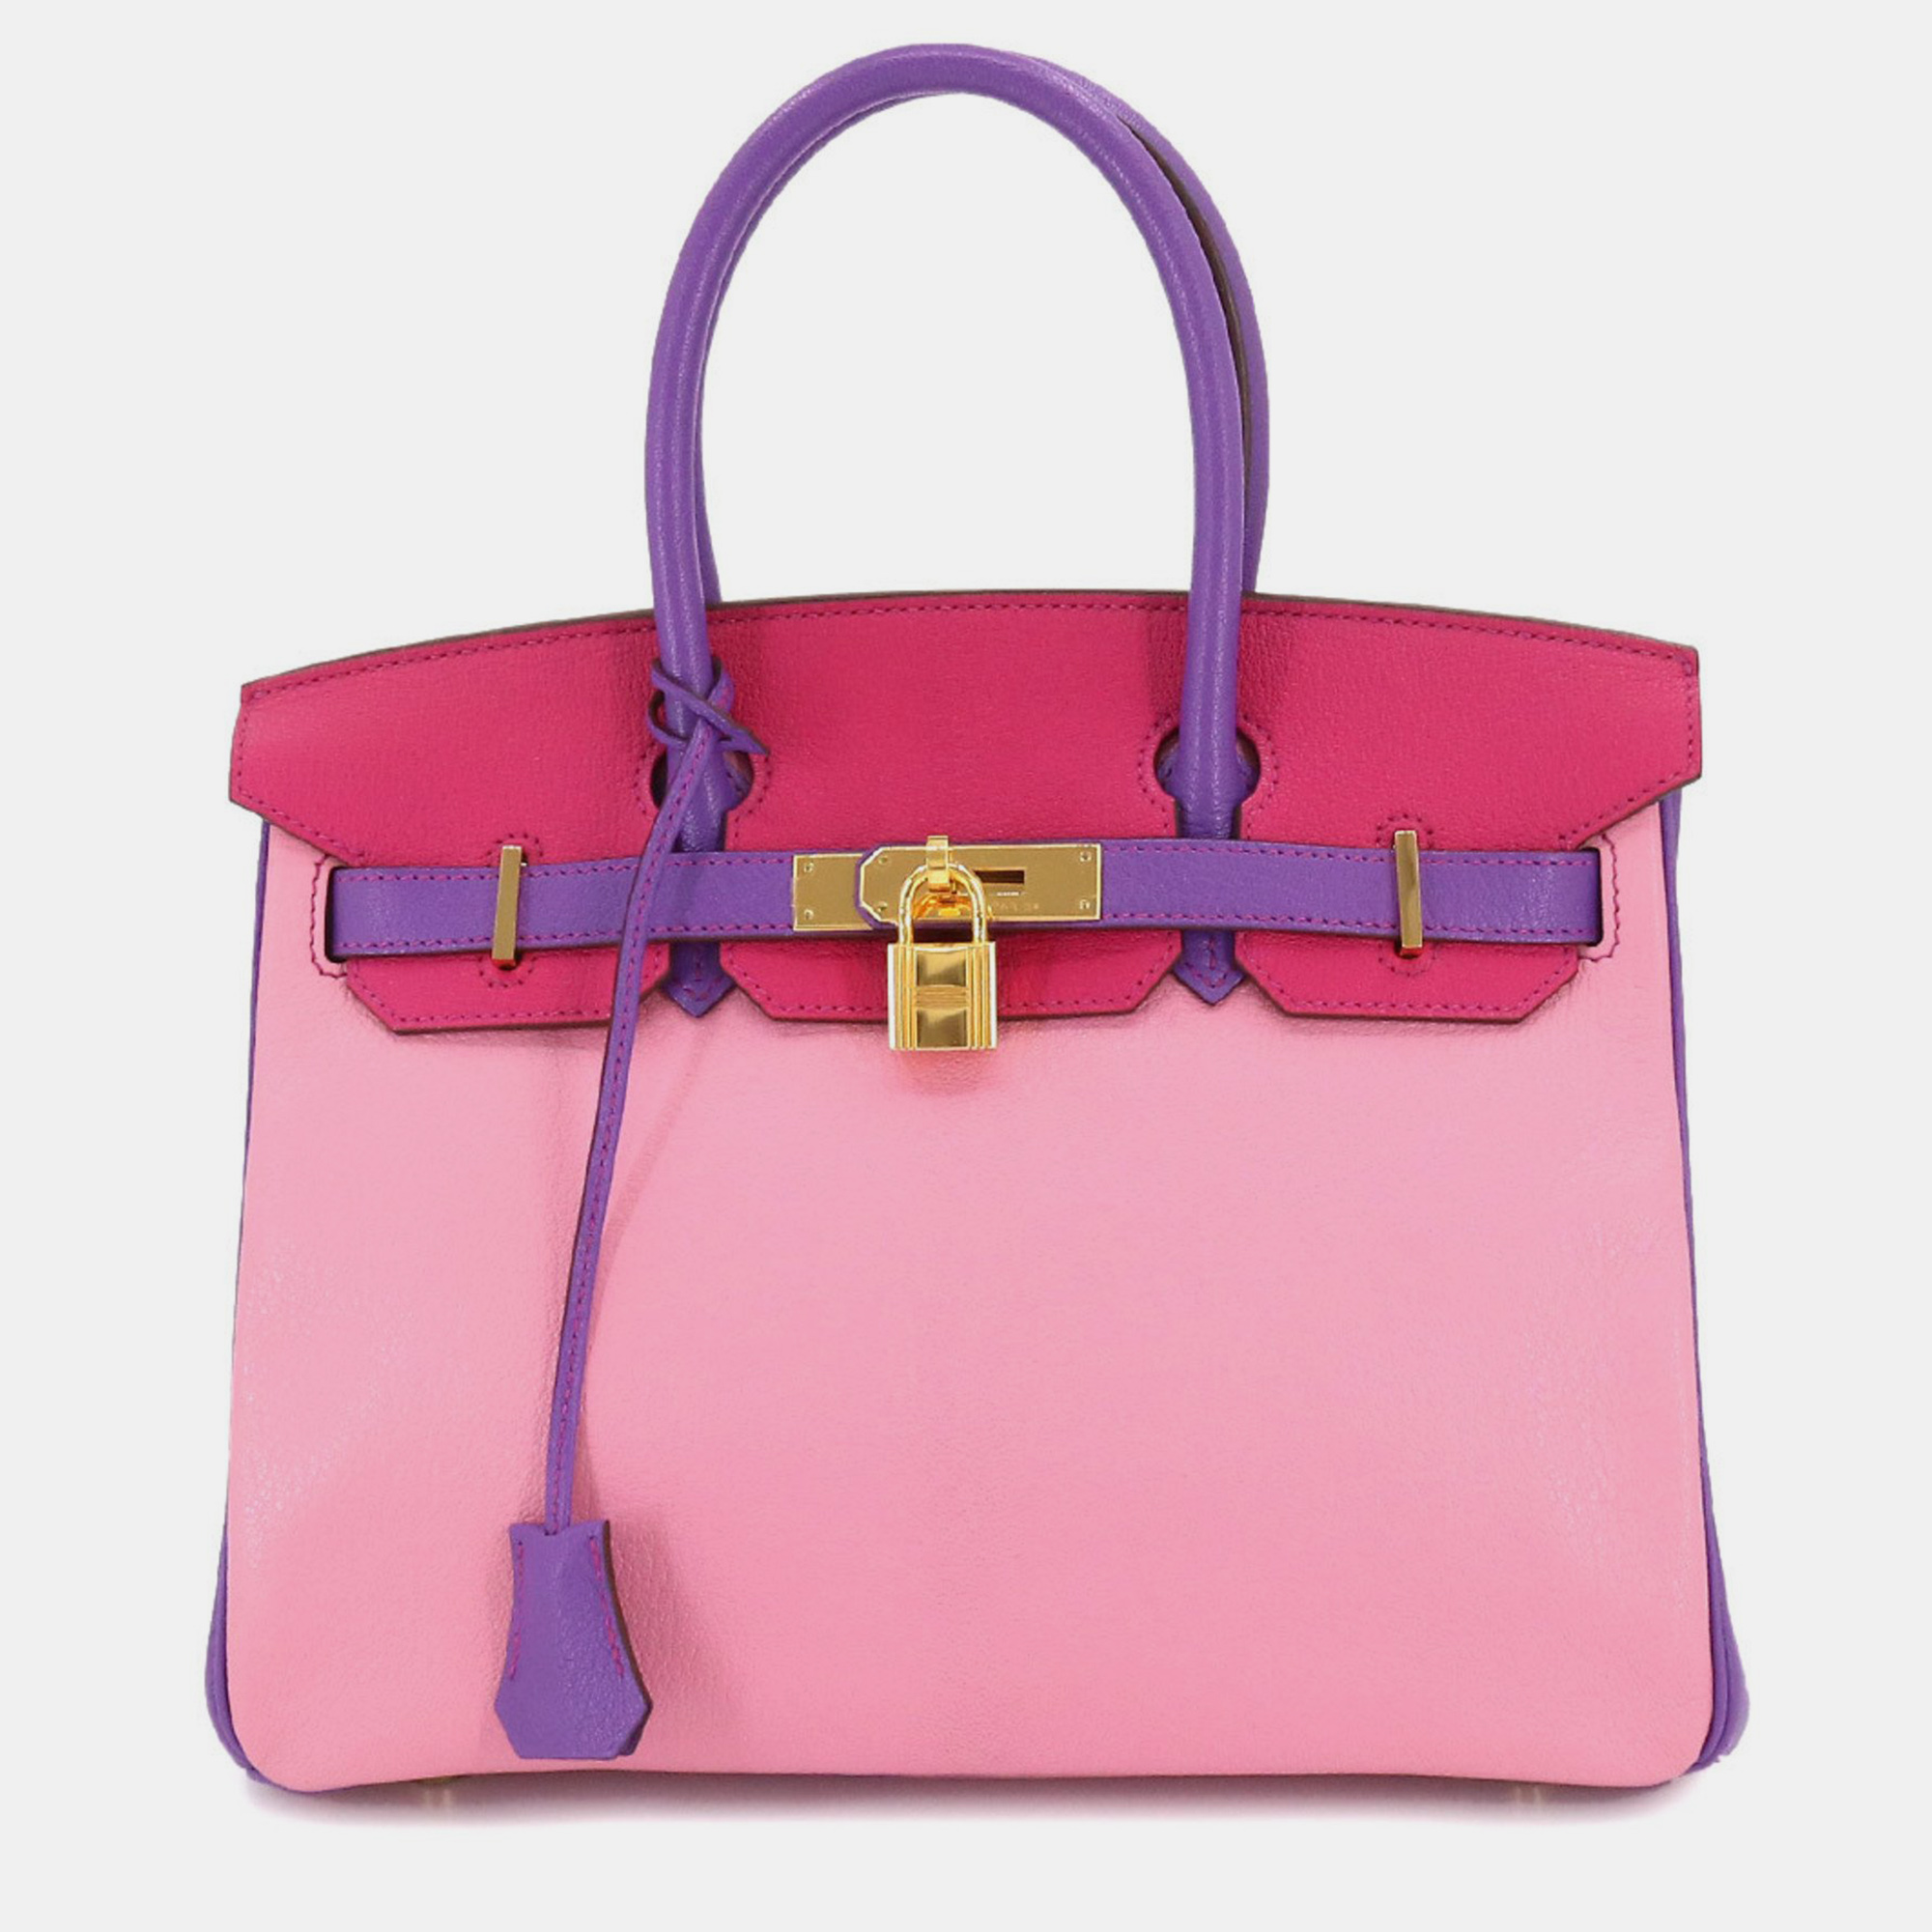 Pre-owned Hermes Birkin 30 Personal Spo Hand Bag Chevre Pink Rose Shocking Palm P Engraved